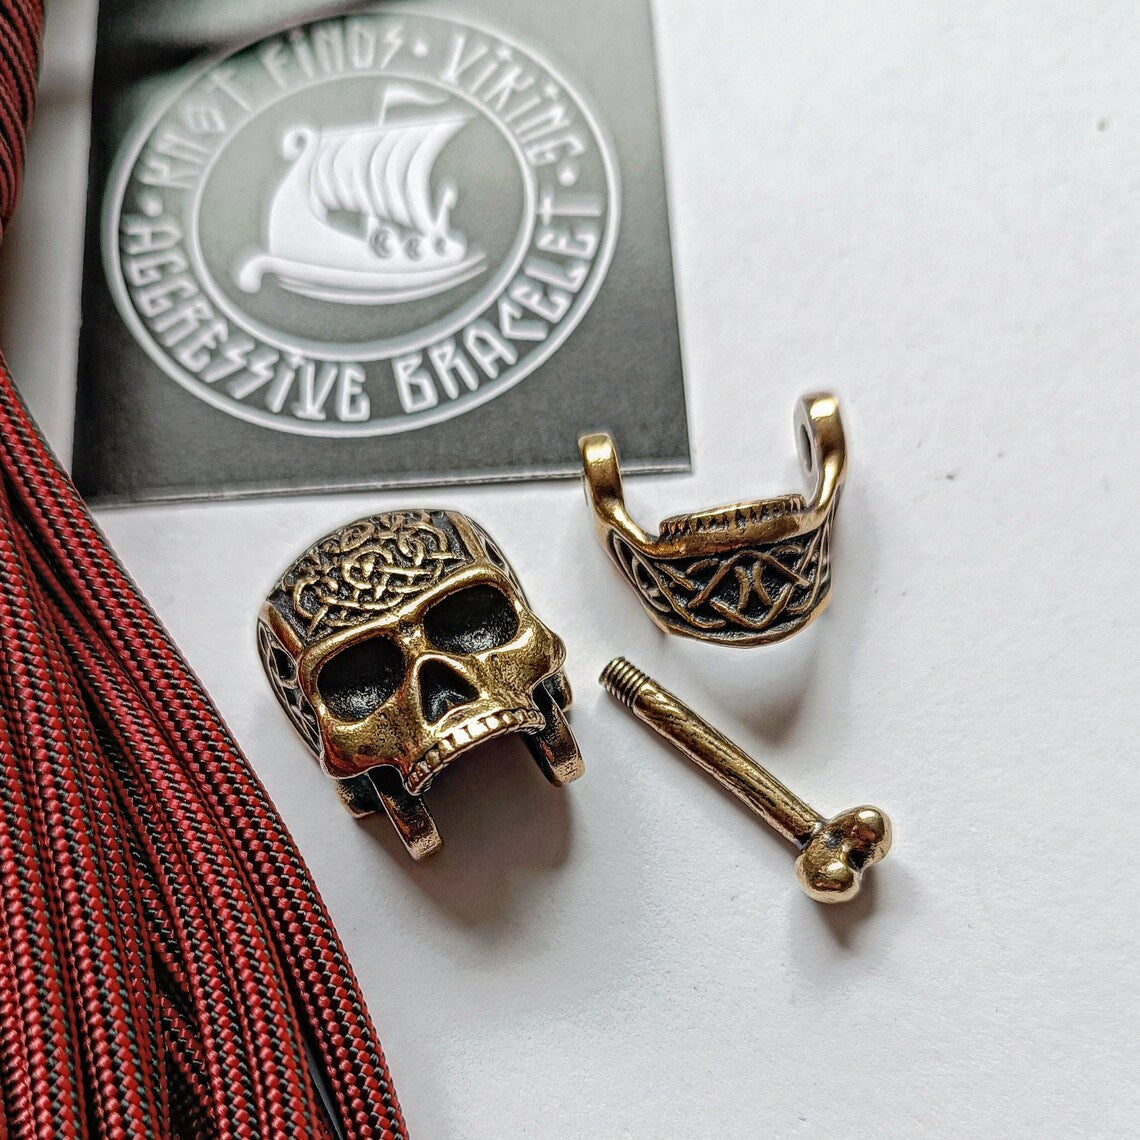 Brass SKULL shackle. Beads for paracord weaving, viking style